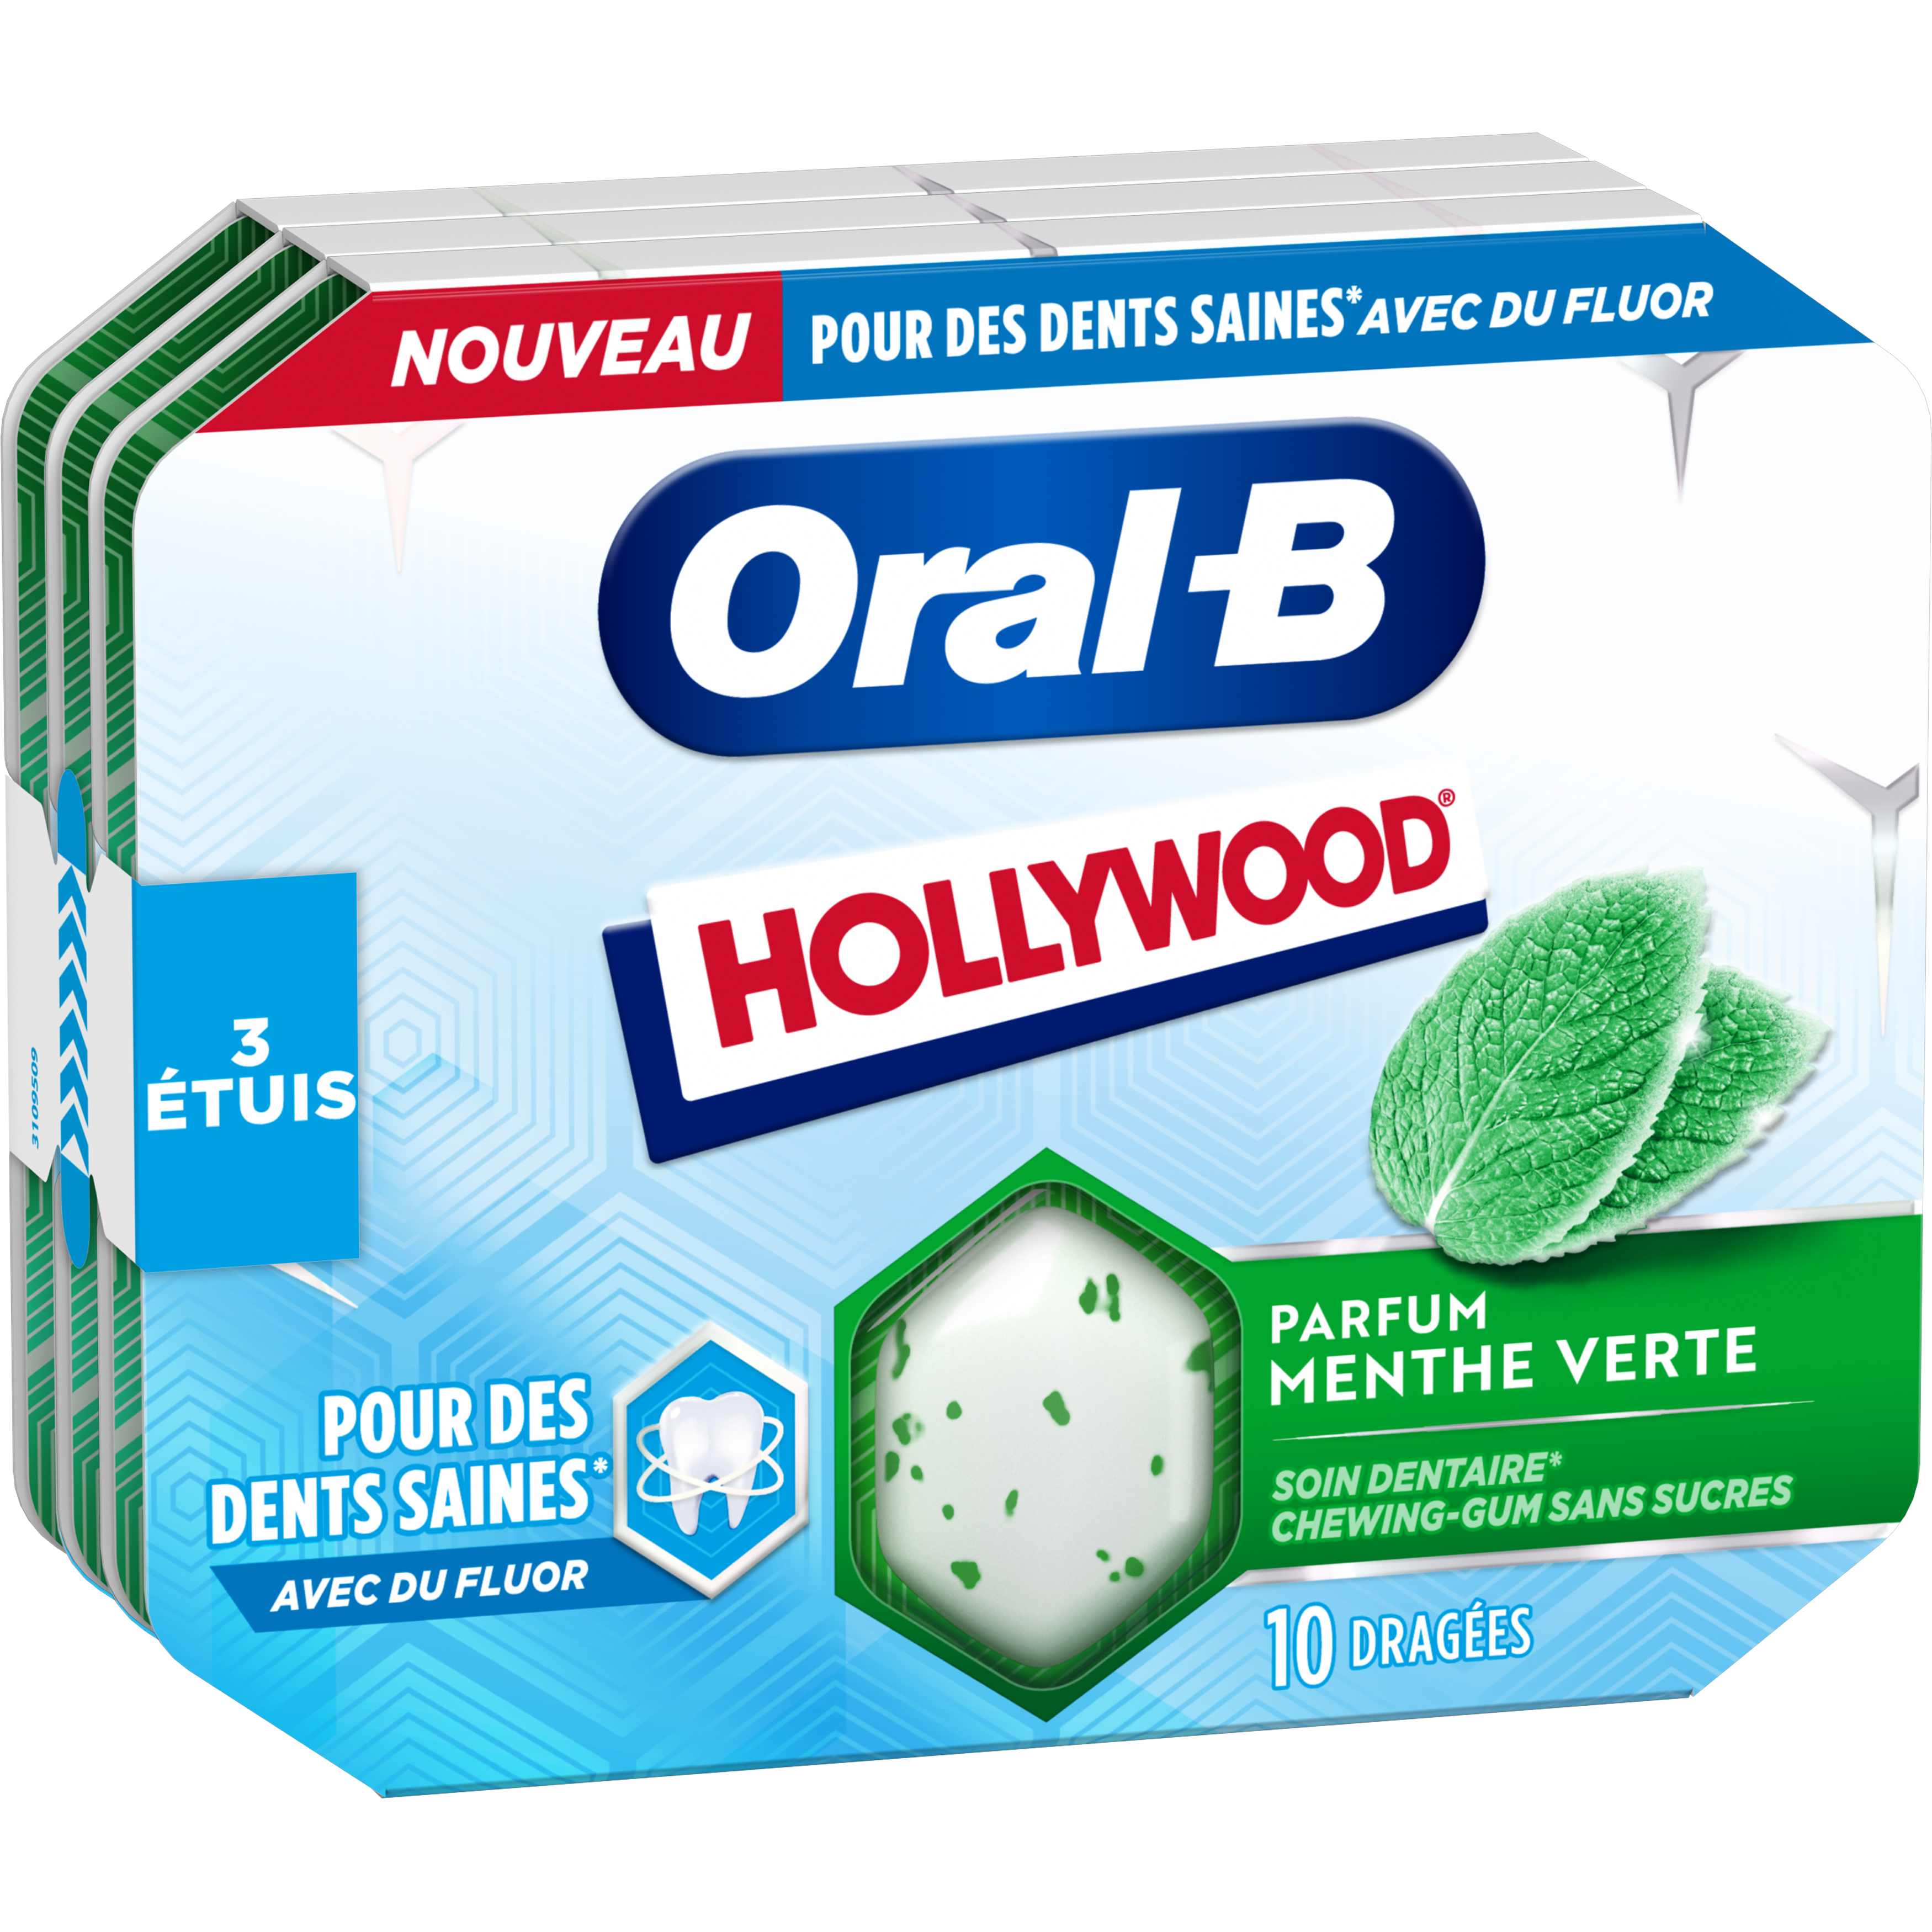 Hollywood chewing gum blancheur menthe polaire sans sucre